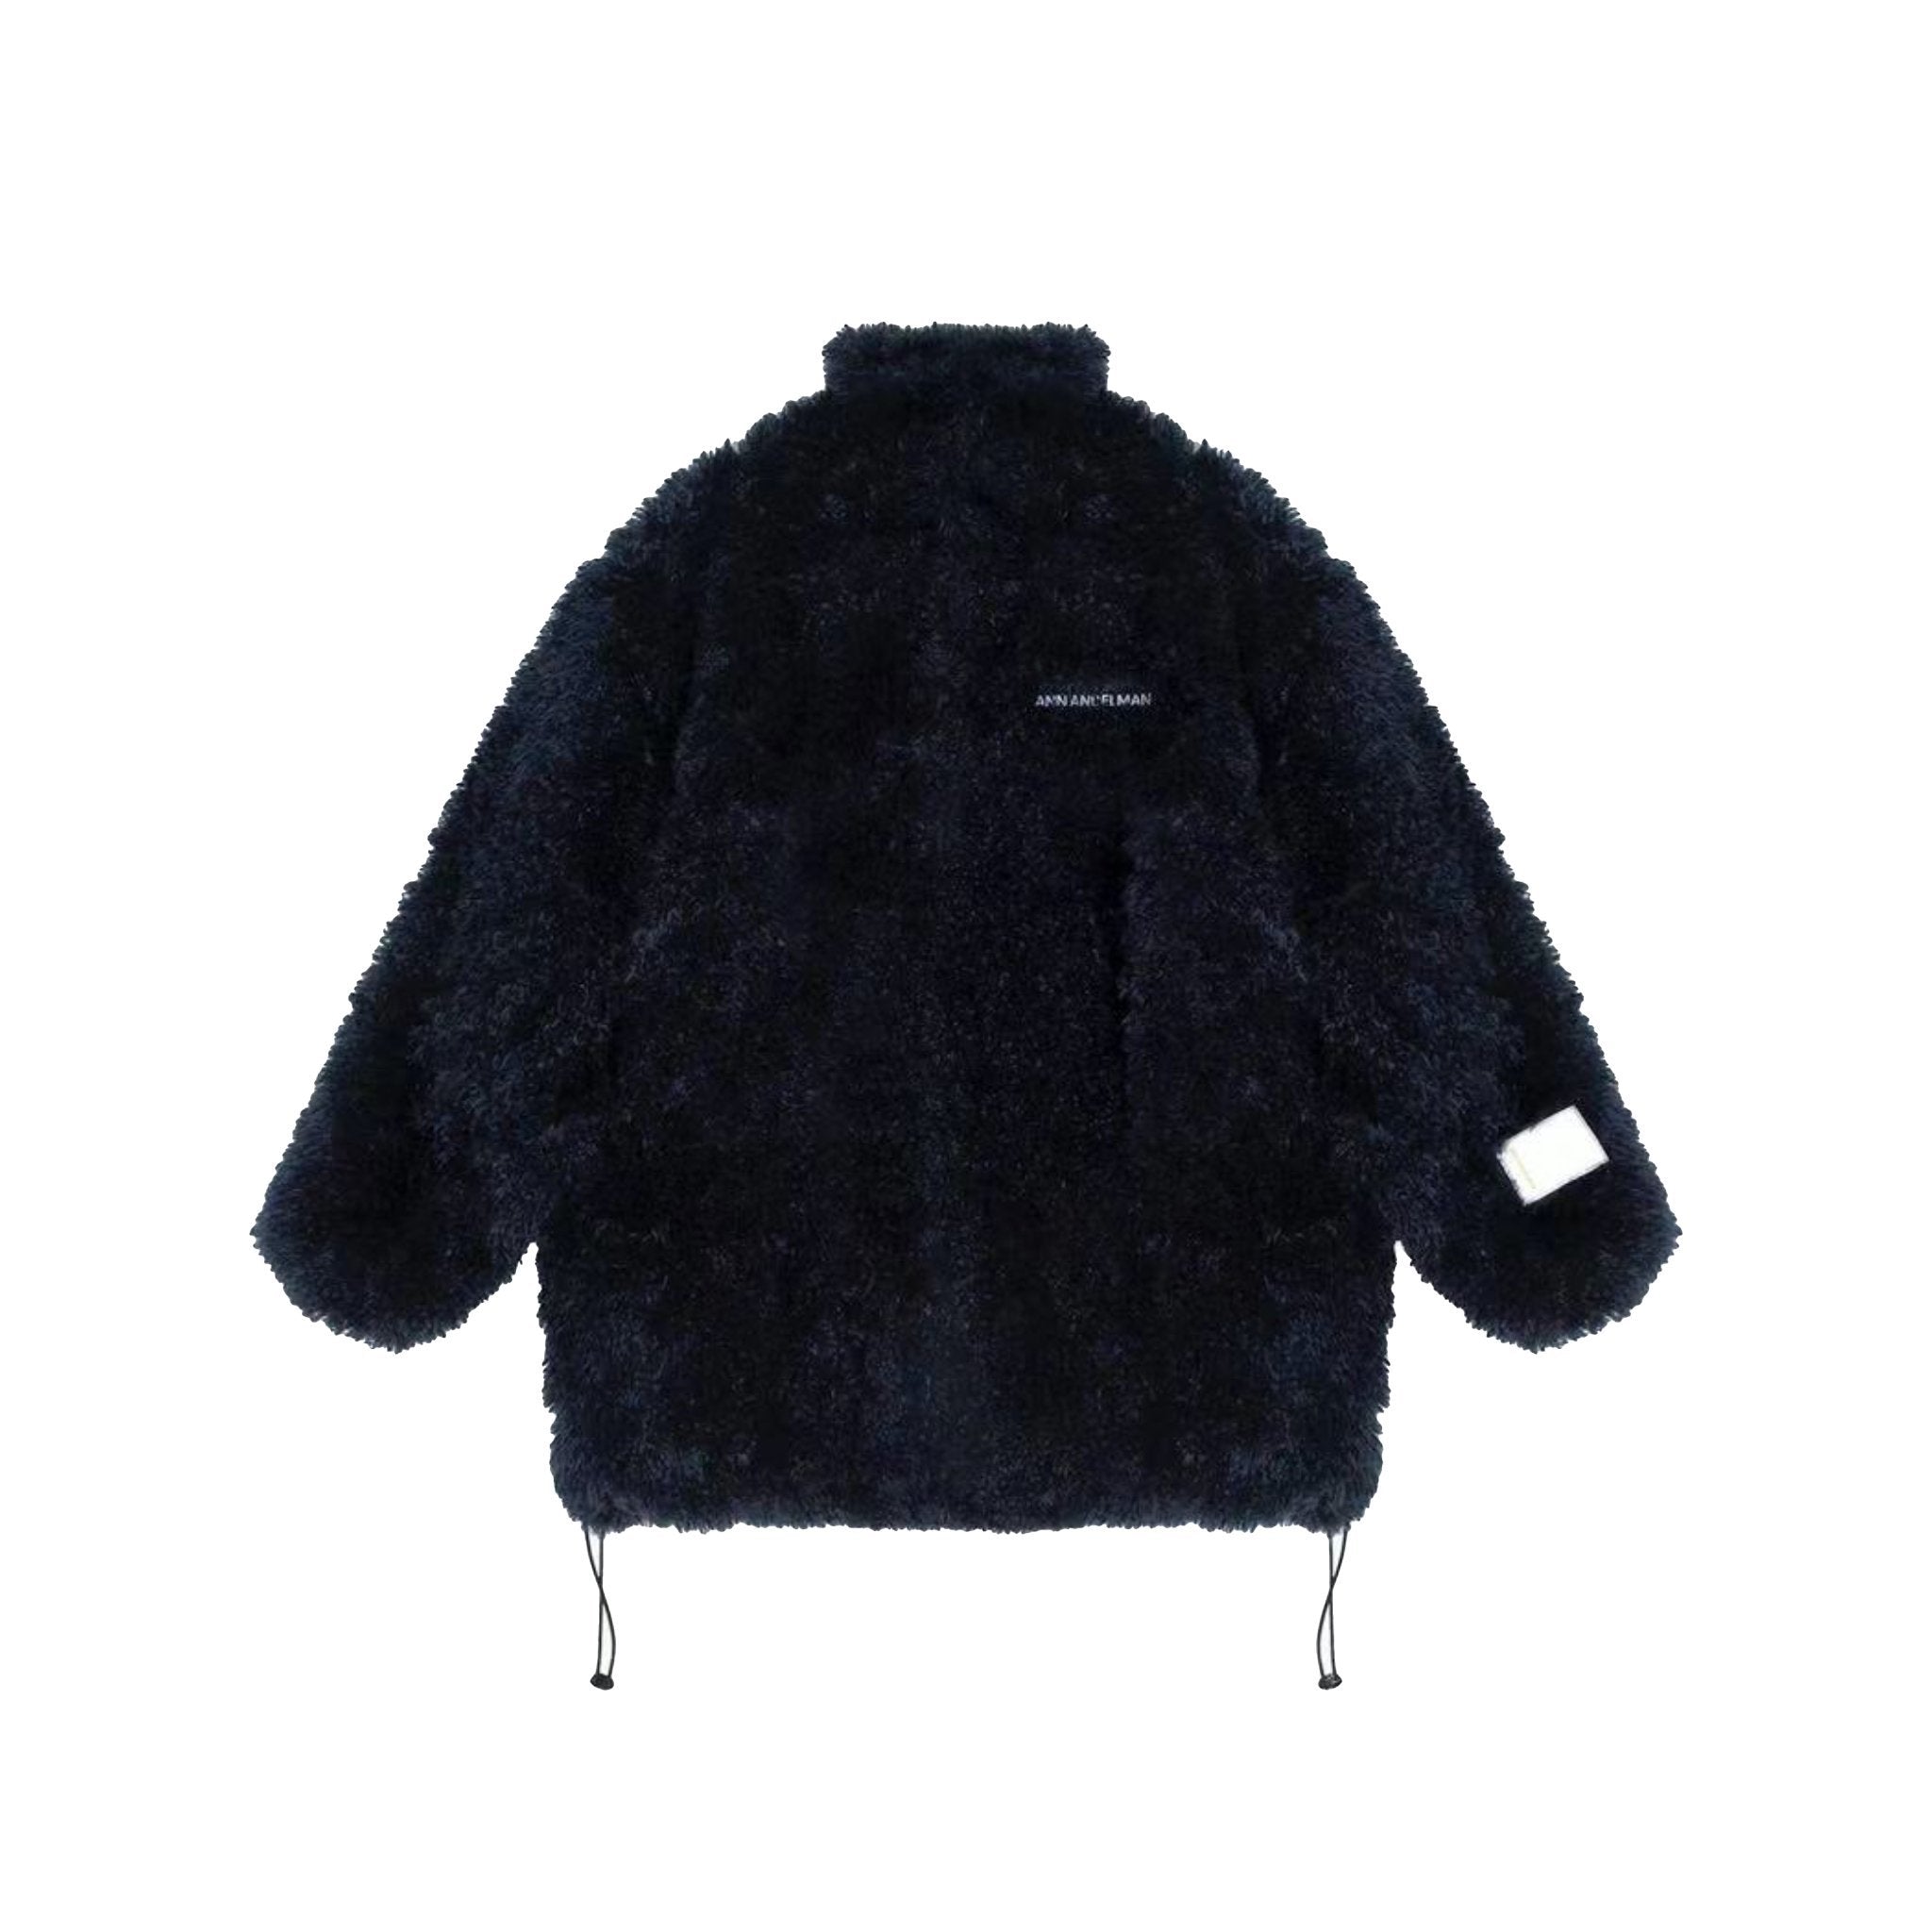 ANN ANDELMAN Black Oversized Fur Coat | MADA IN CHINA